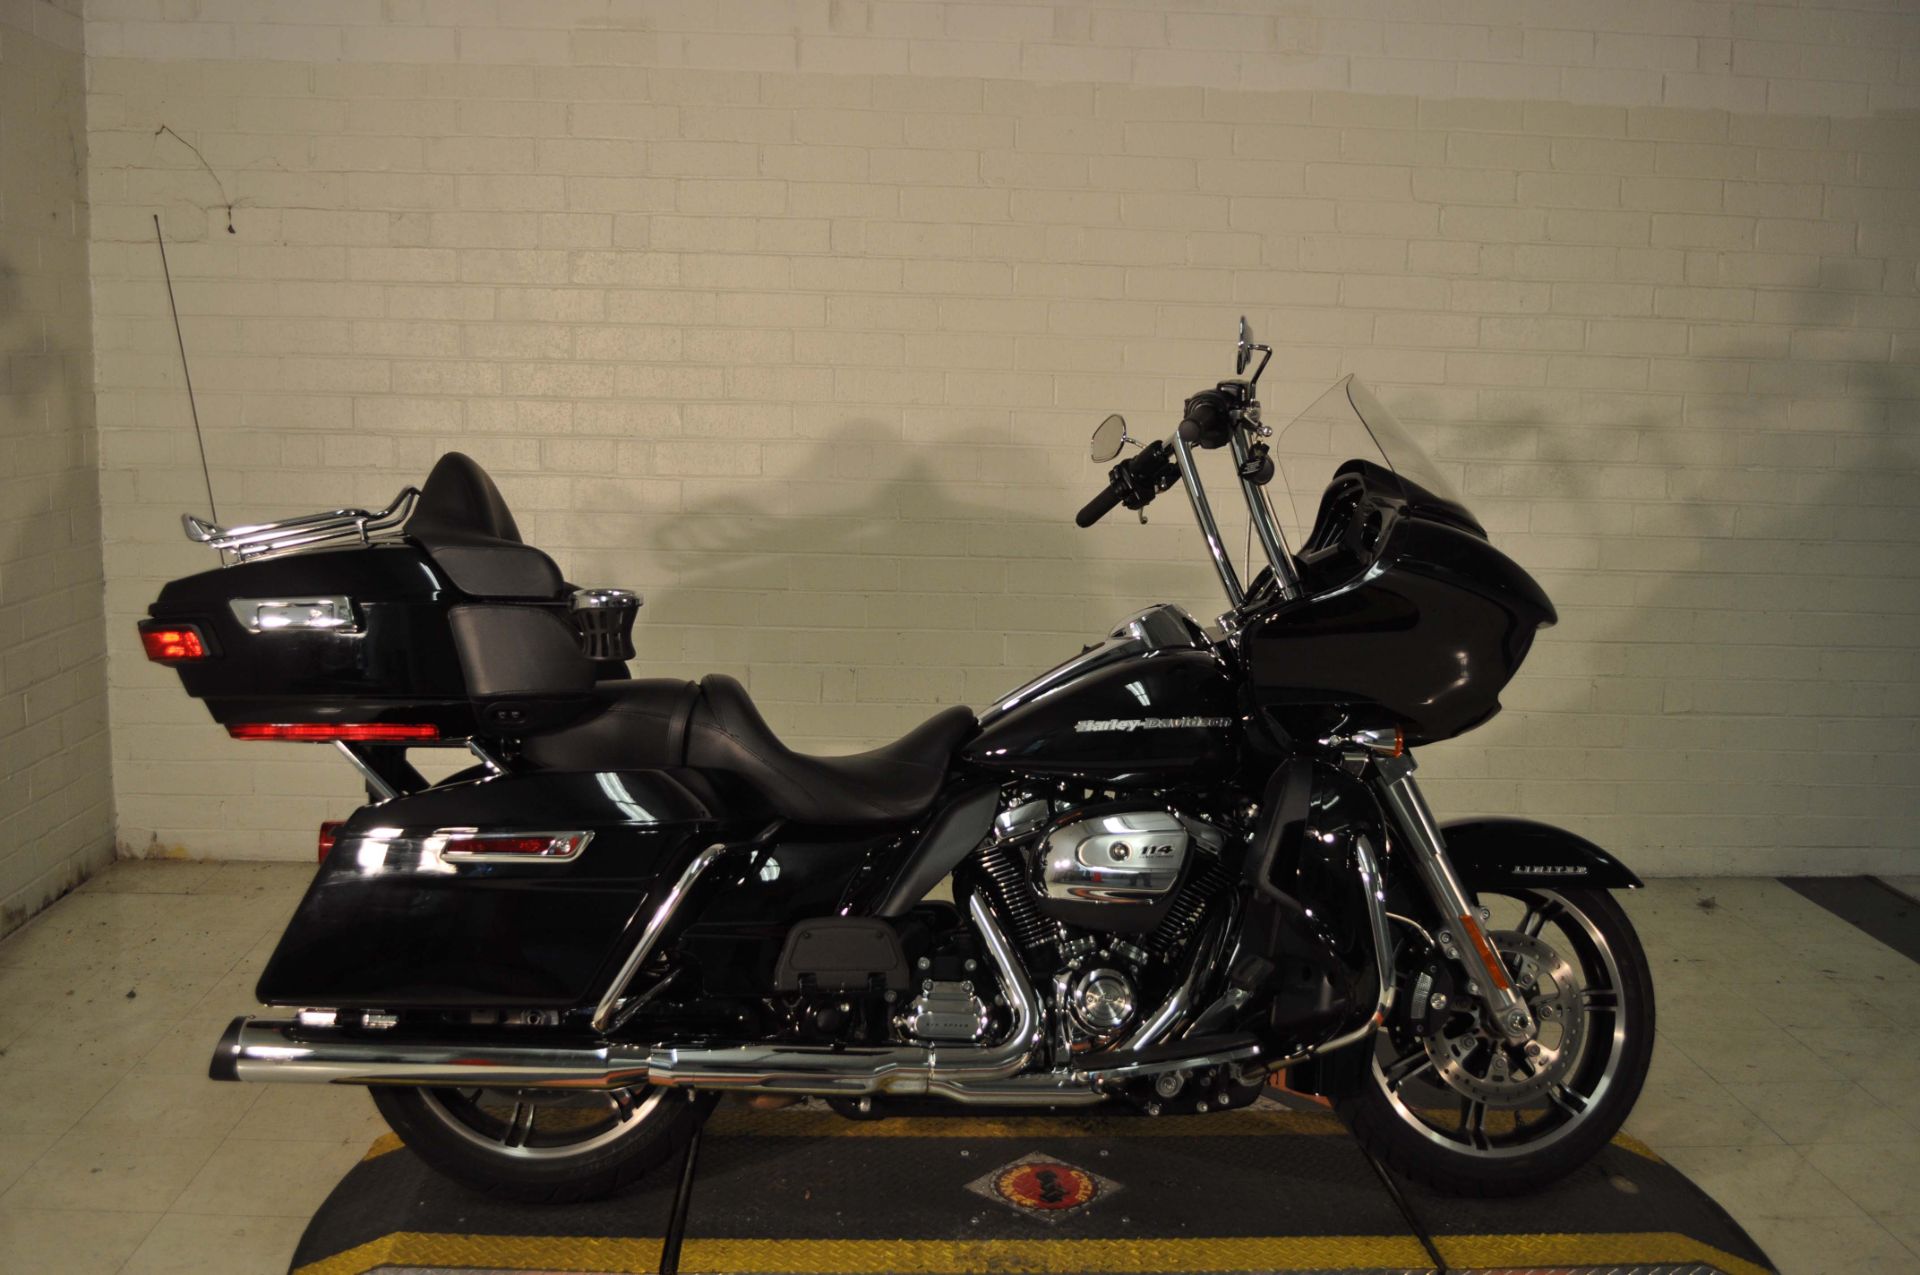 2021 Harley-Davidson Road Glide® Limited in Winston Salem, North Carolina - Photo 2